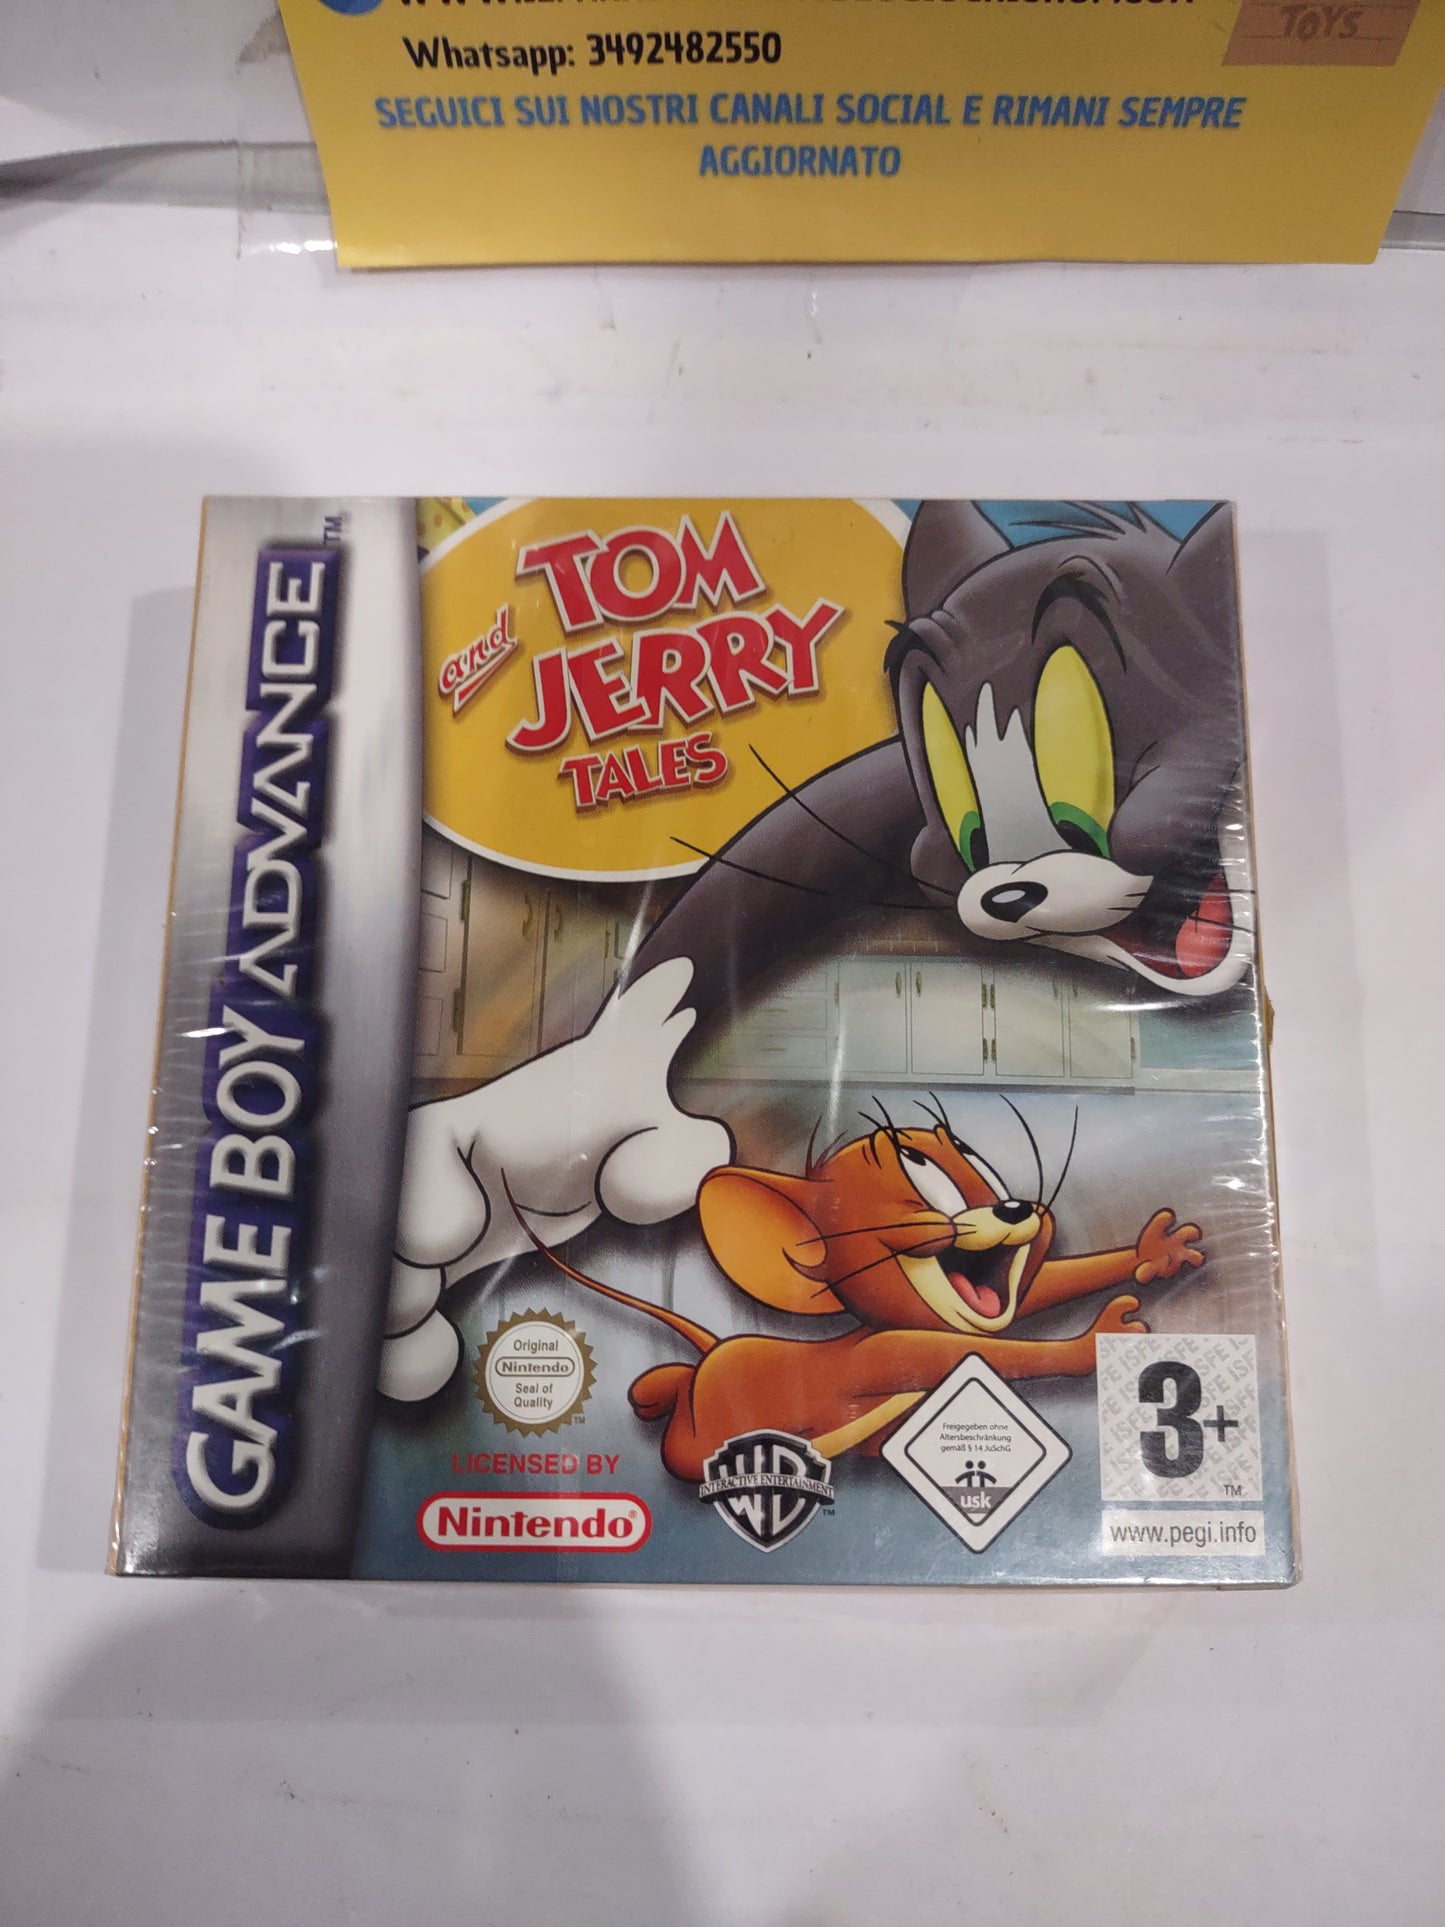 Gioco sealed Gameboy Advance GBA Tom & Jerry tales Nintendo